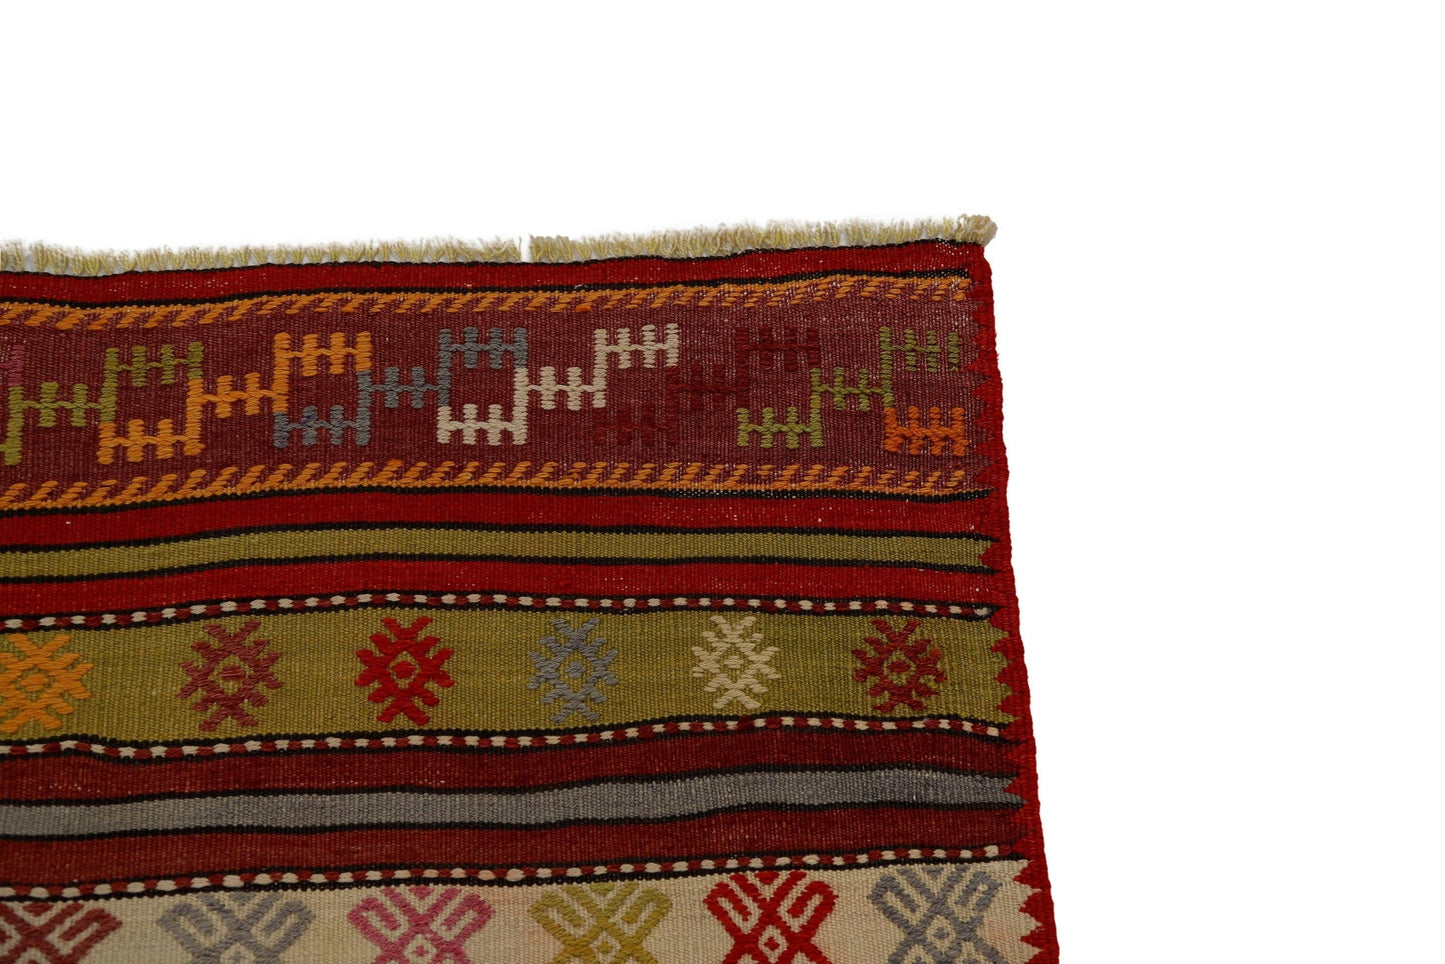 Turkish Kilim Rug, Area Rug, 6x9 Vintage Wool Rug, Eclectic Kilim Rug, 6x9 Kilim Rug, Bohemian Decor, Living Room Rug, Bedroom Rug, 2504